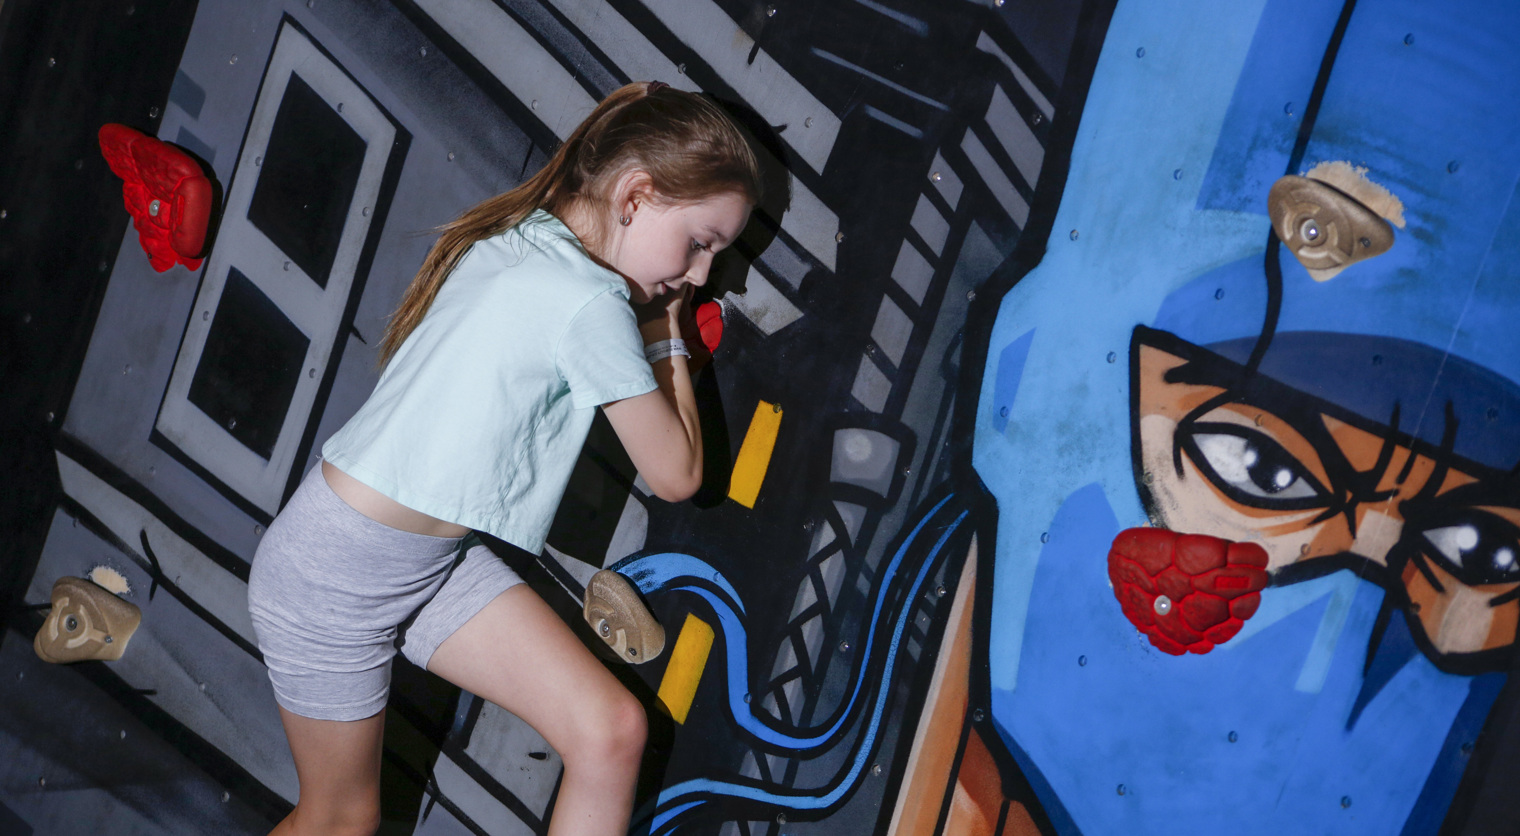 A child exploring the Traversing Wall at Flip Out UK